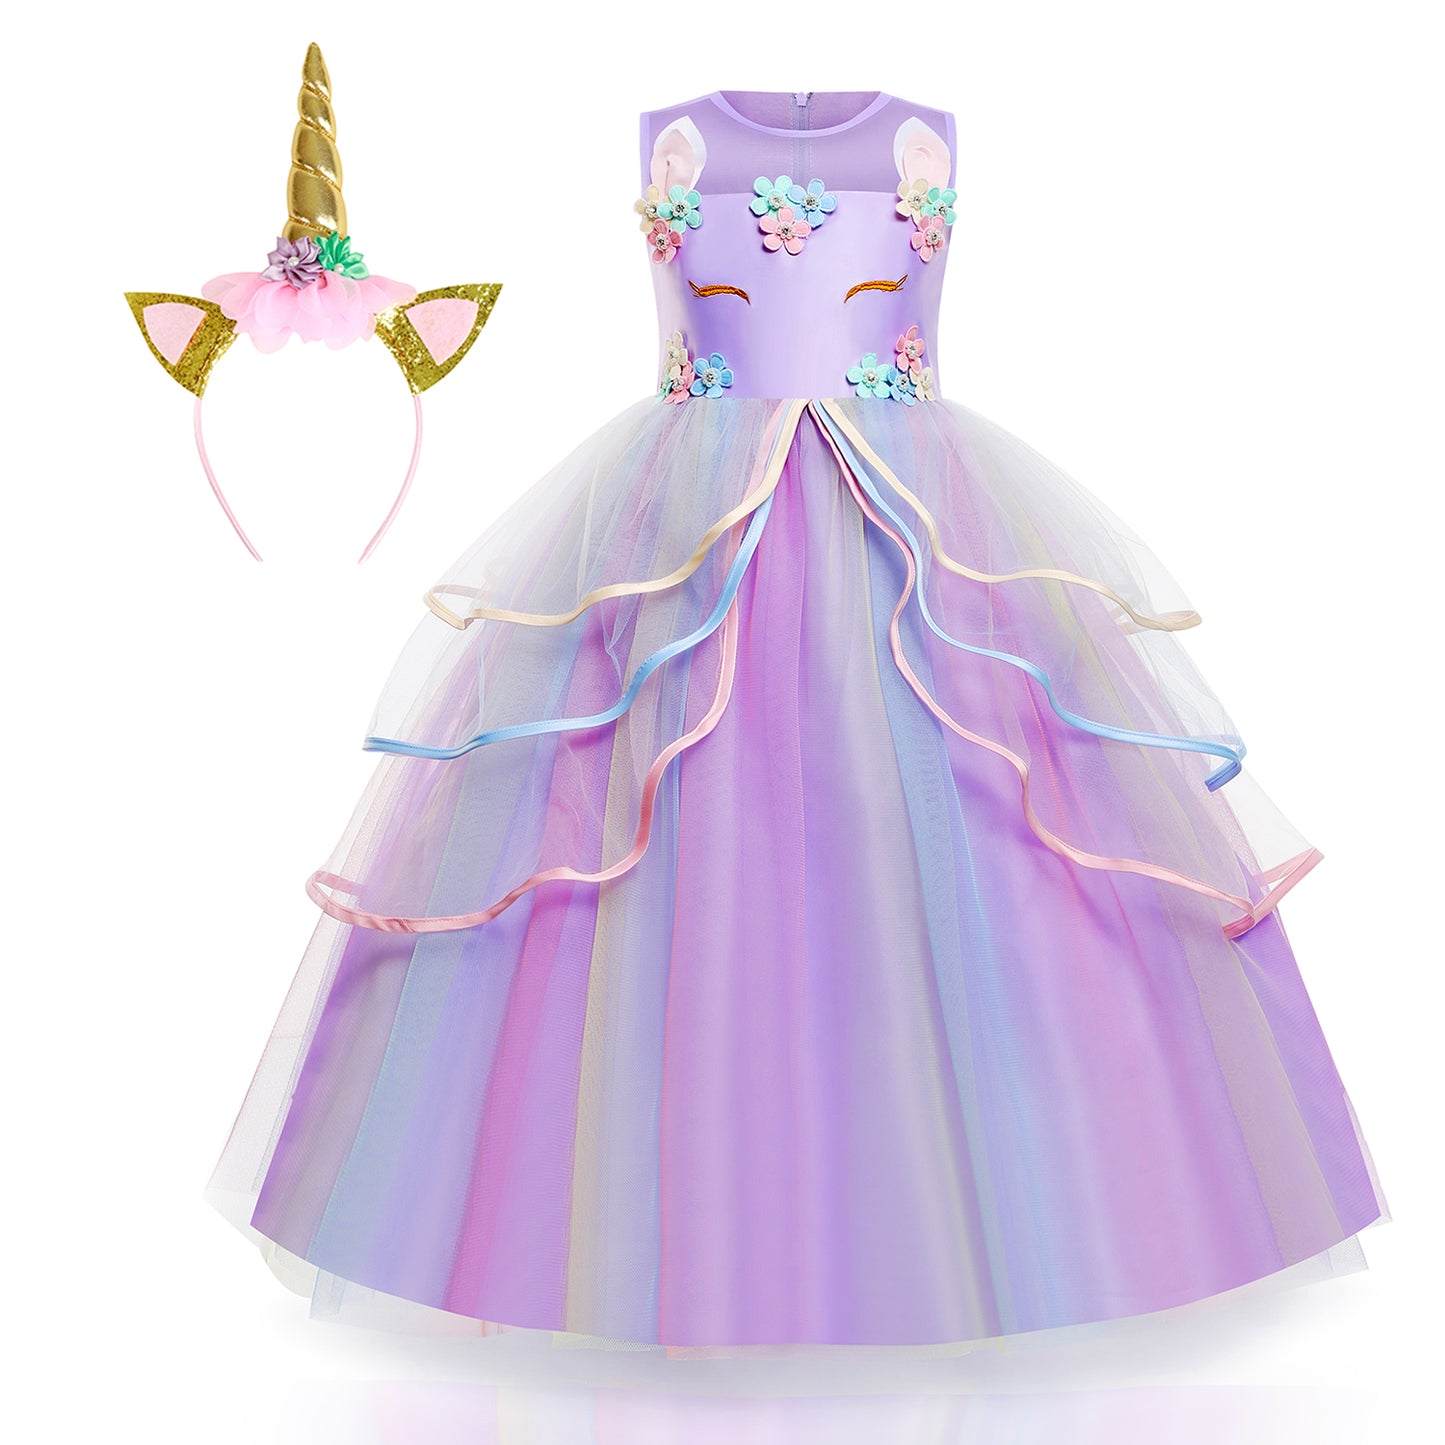 Foierp Child Long Evening Dress - Princess Dress Rainbow Pink for 3-12 Years Old